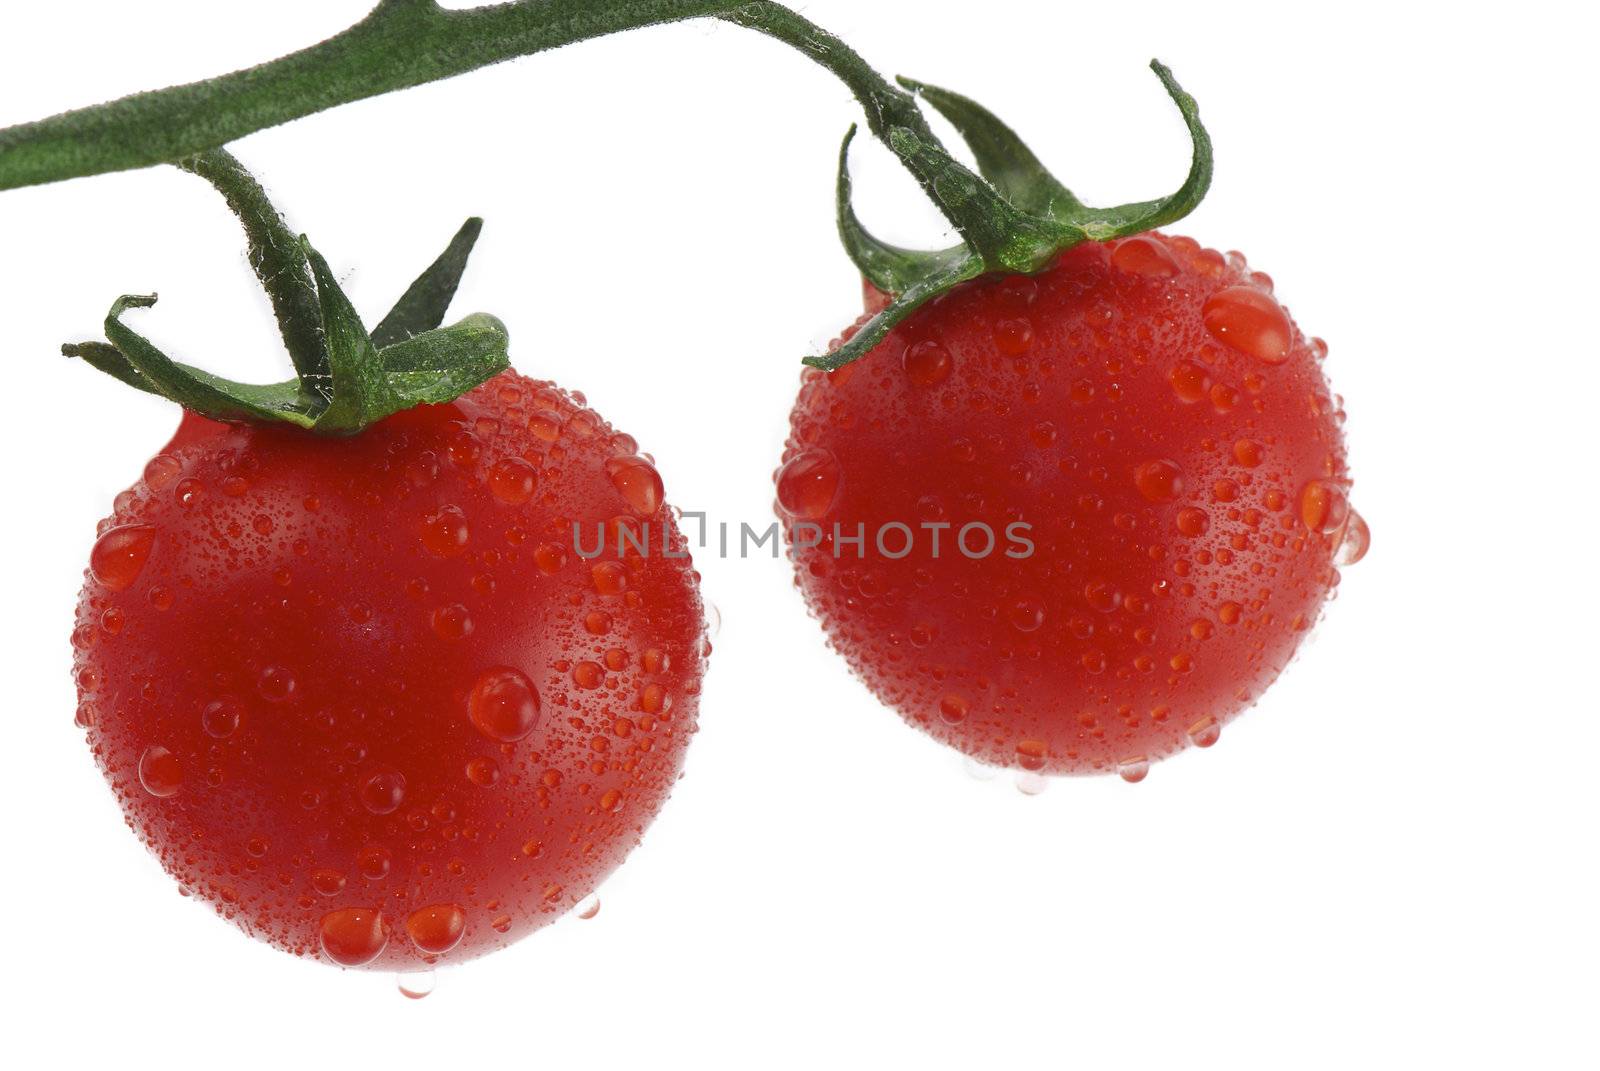 Mini tomatoes by Kamensky